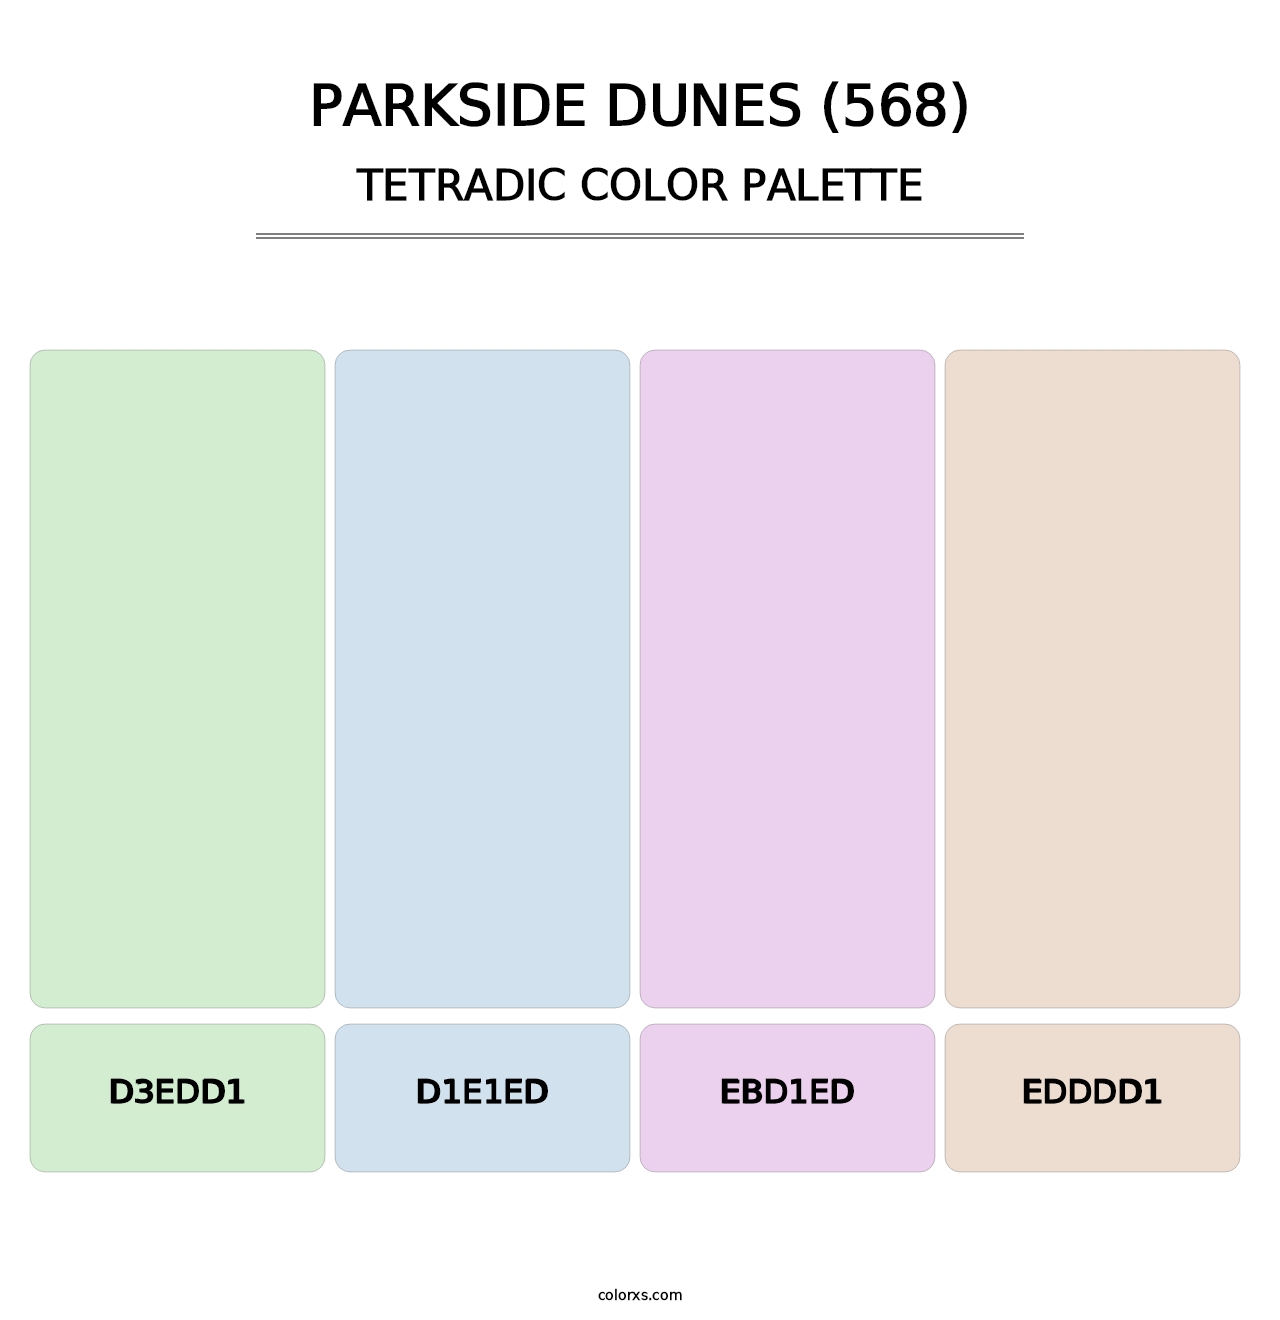 Parkside Dunes (568) - Tetradic Color Palette